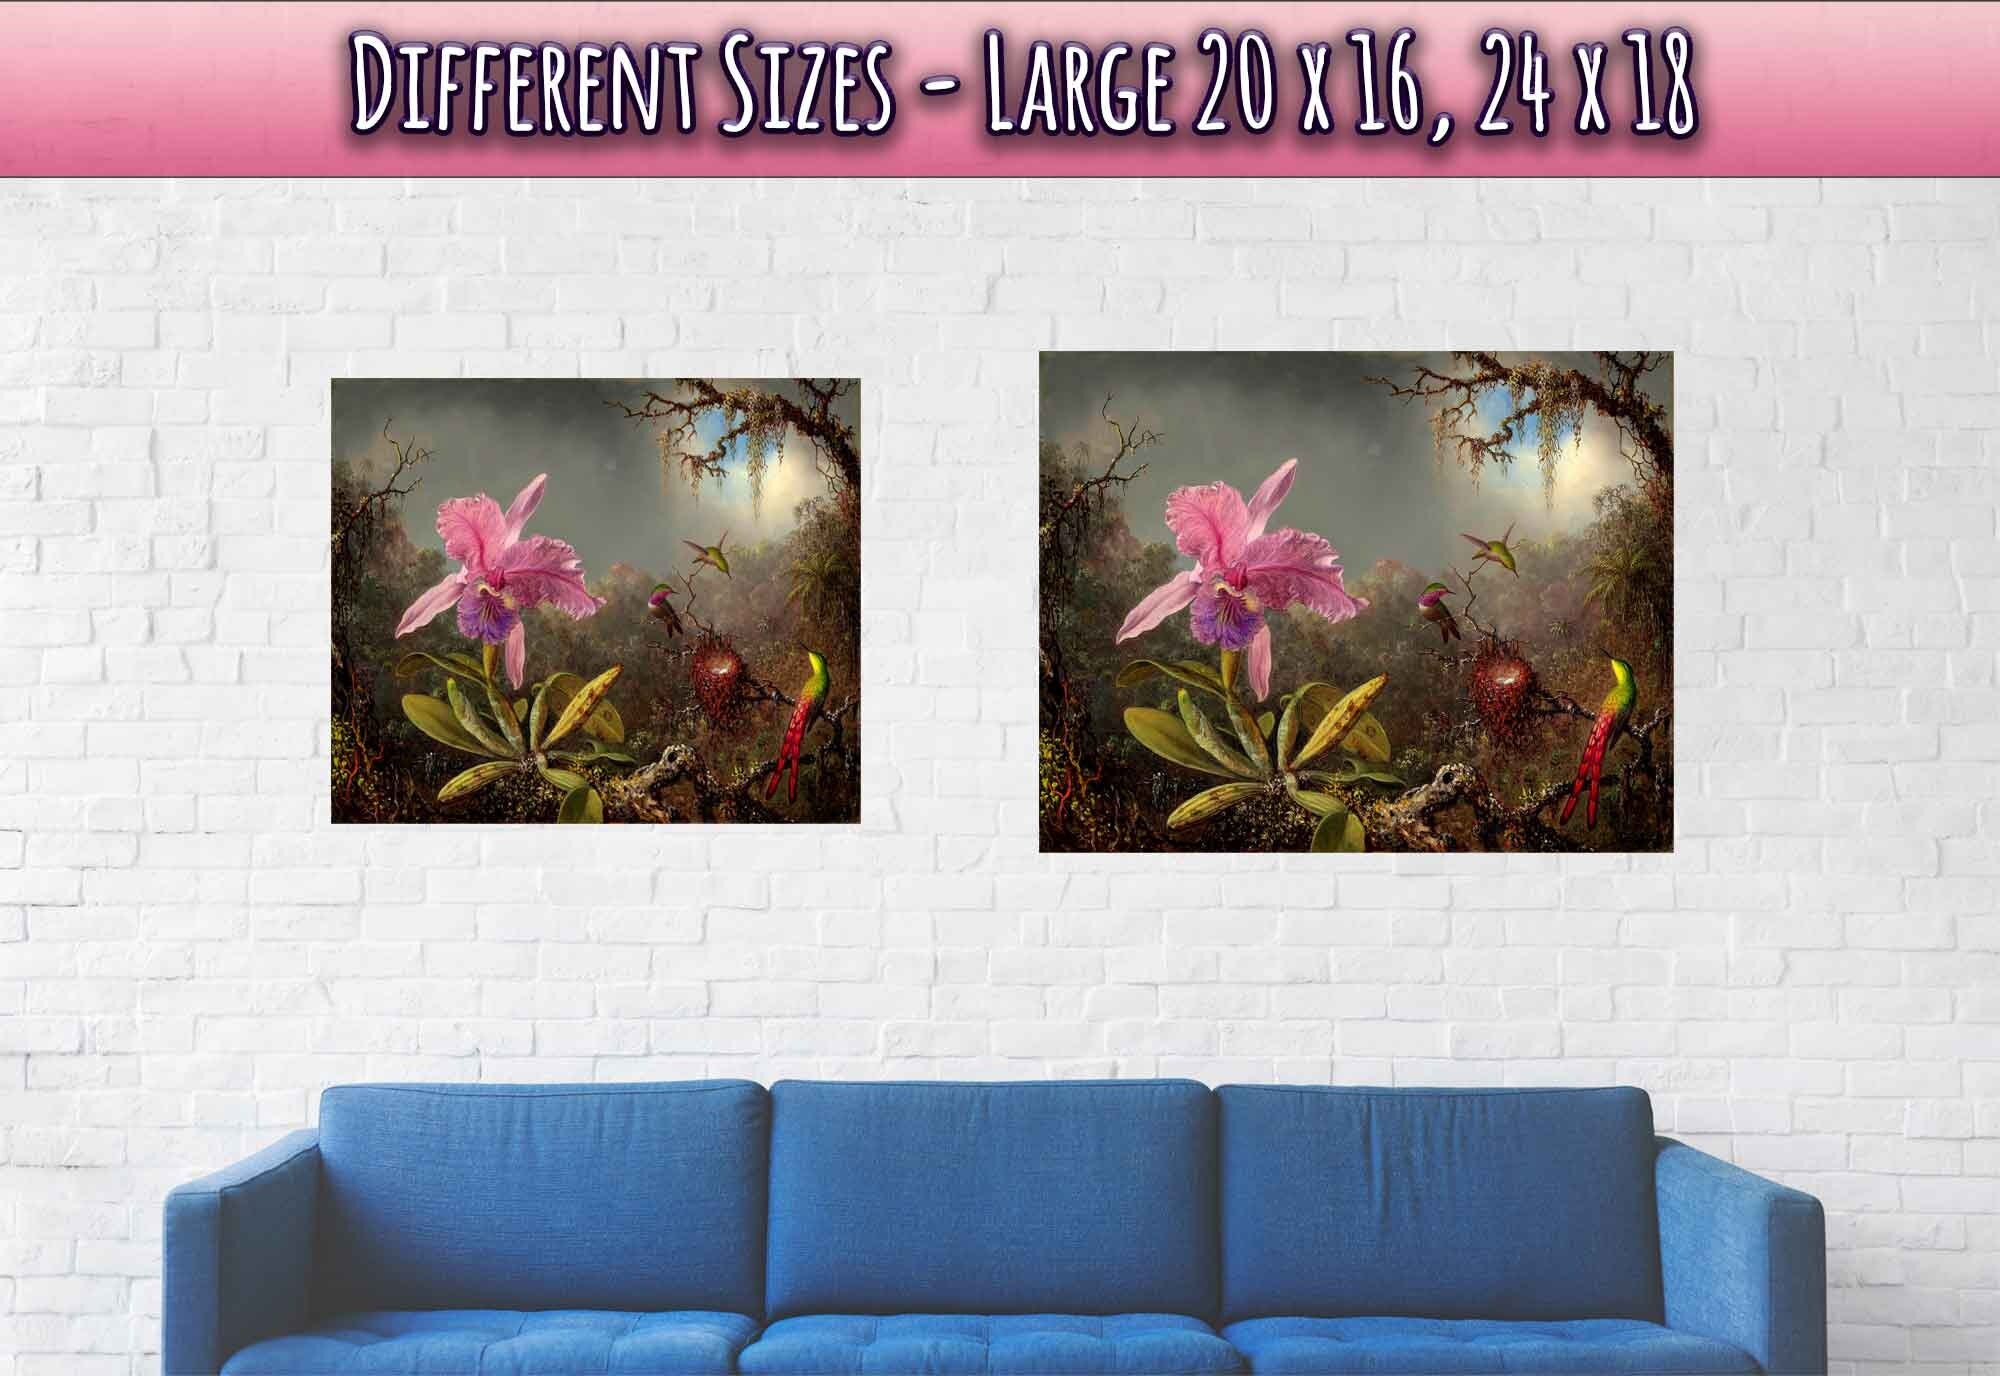 Pink Orchid Poster - Cattleya Orchid With Three Hummimgbirds - Vintage Orchid Art Print - WallArtPrints4U